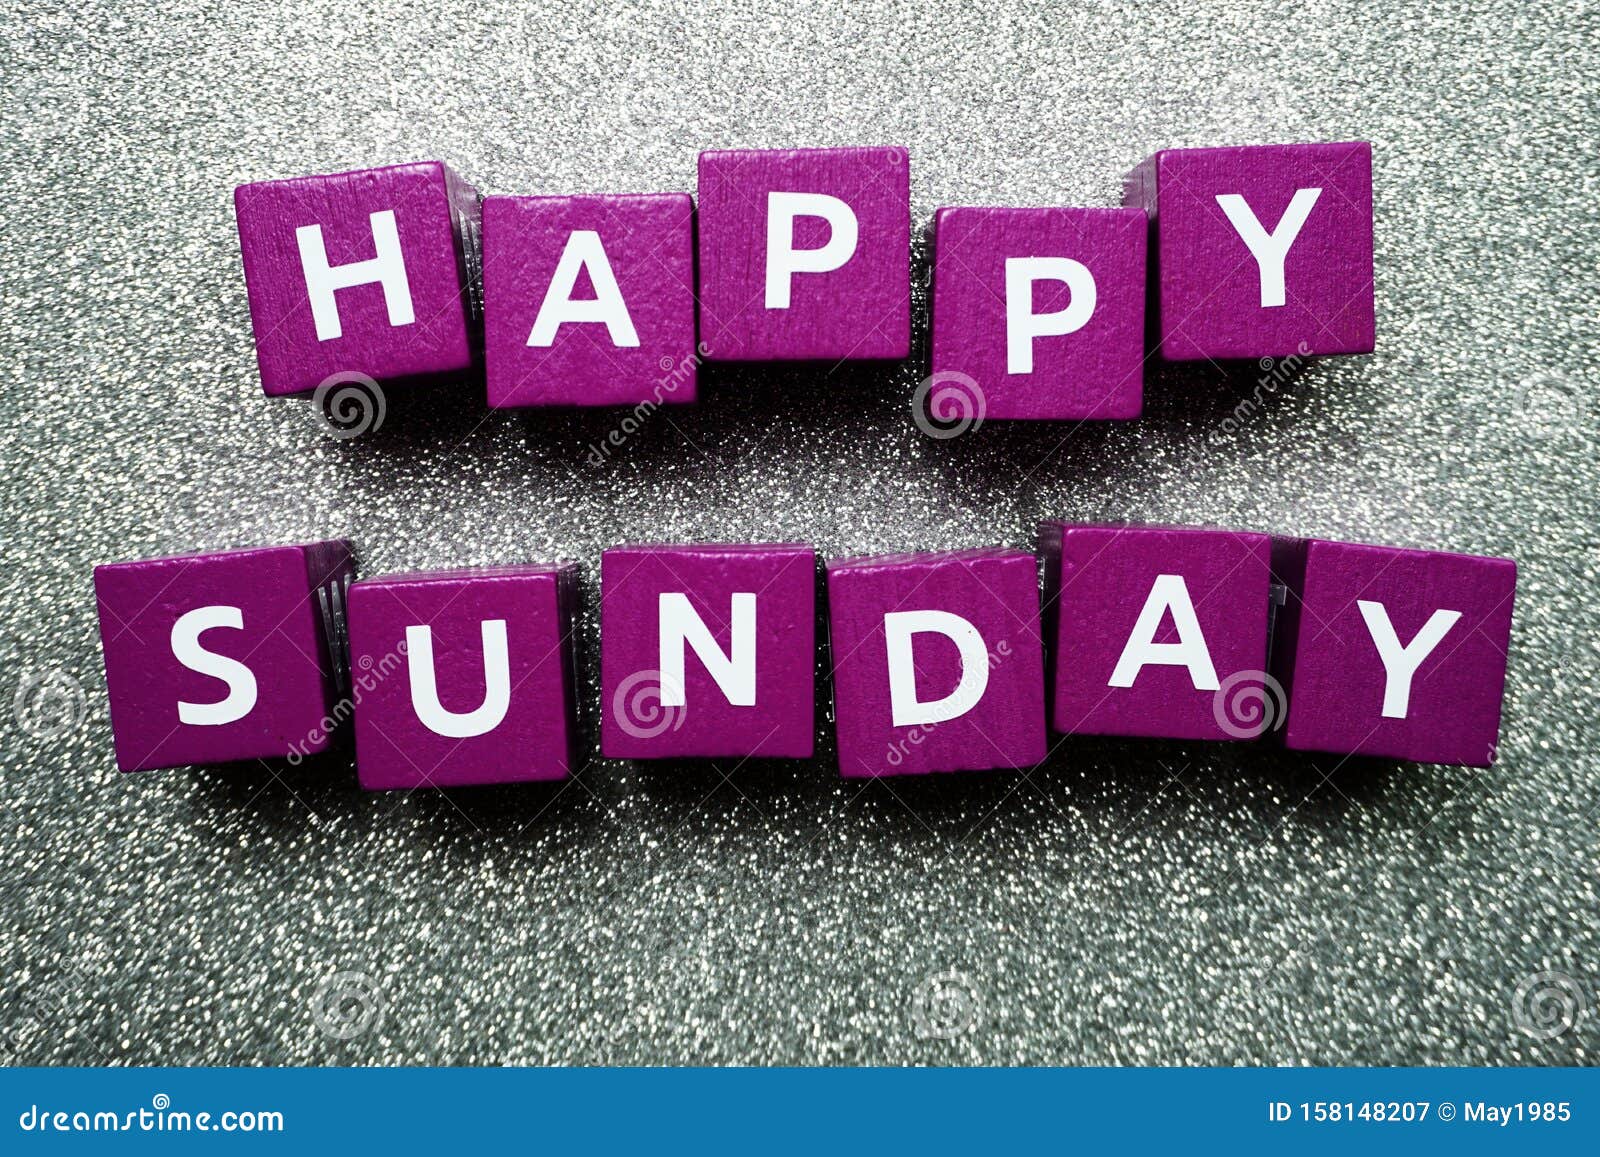 Happy Sunday Alphabet Letter on Glitter Background Stock Image ...